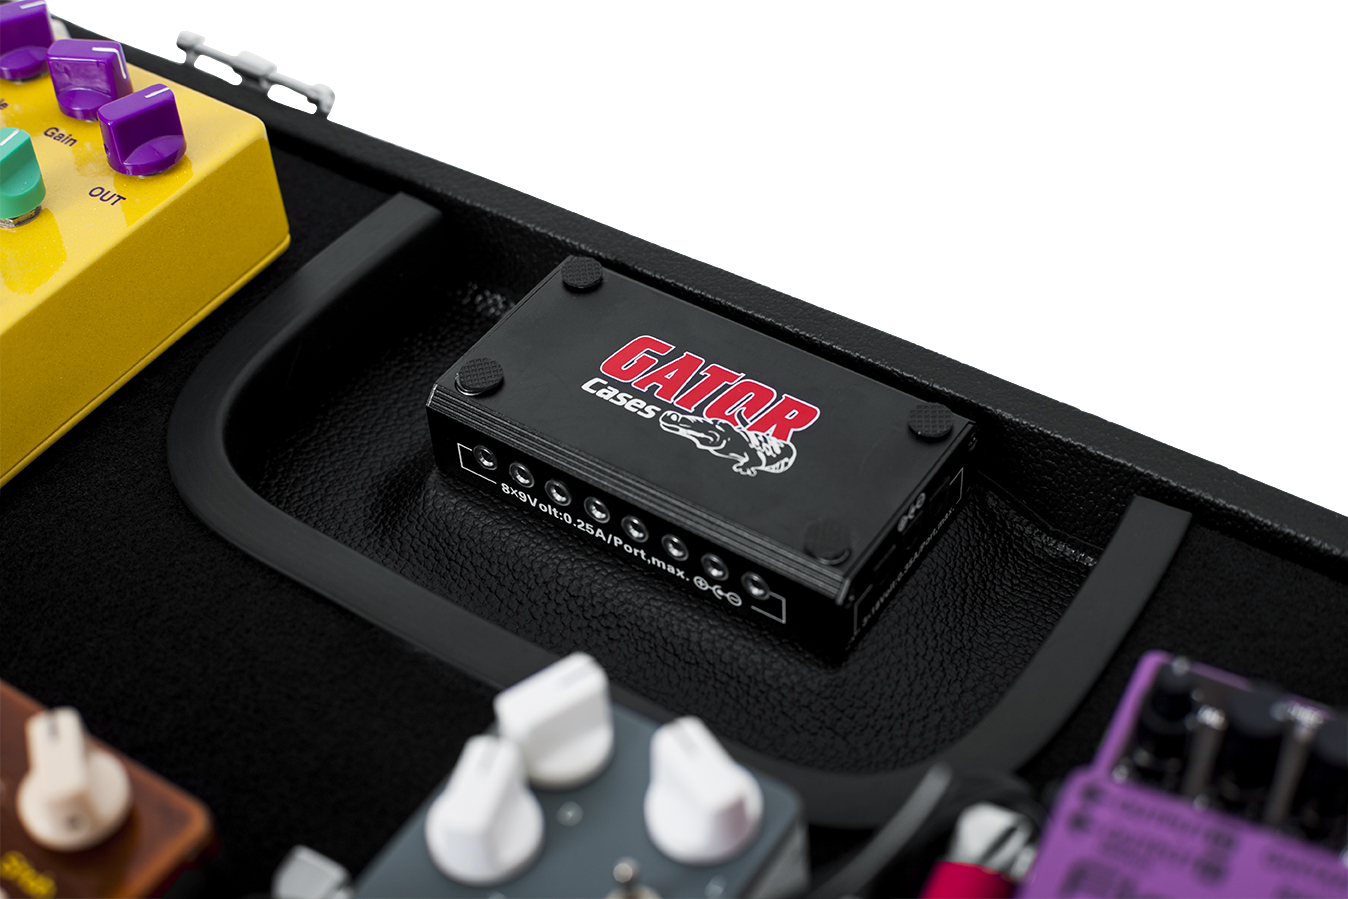 Gig-Box Jr. Pedal Board/Guitar Stand Case-GW-GIGBOXJR